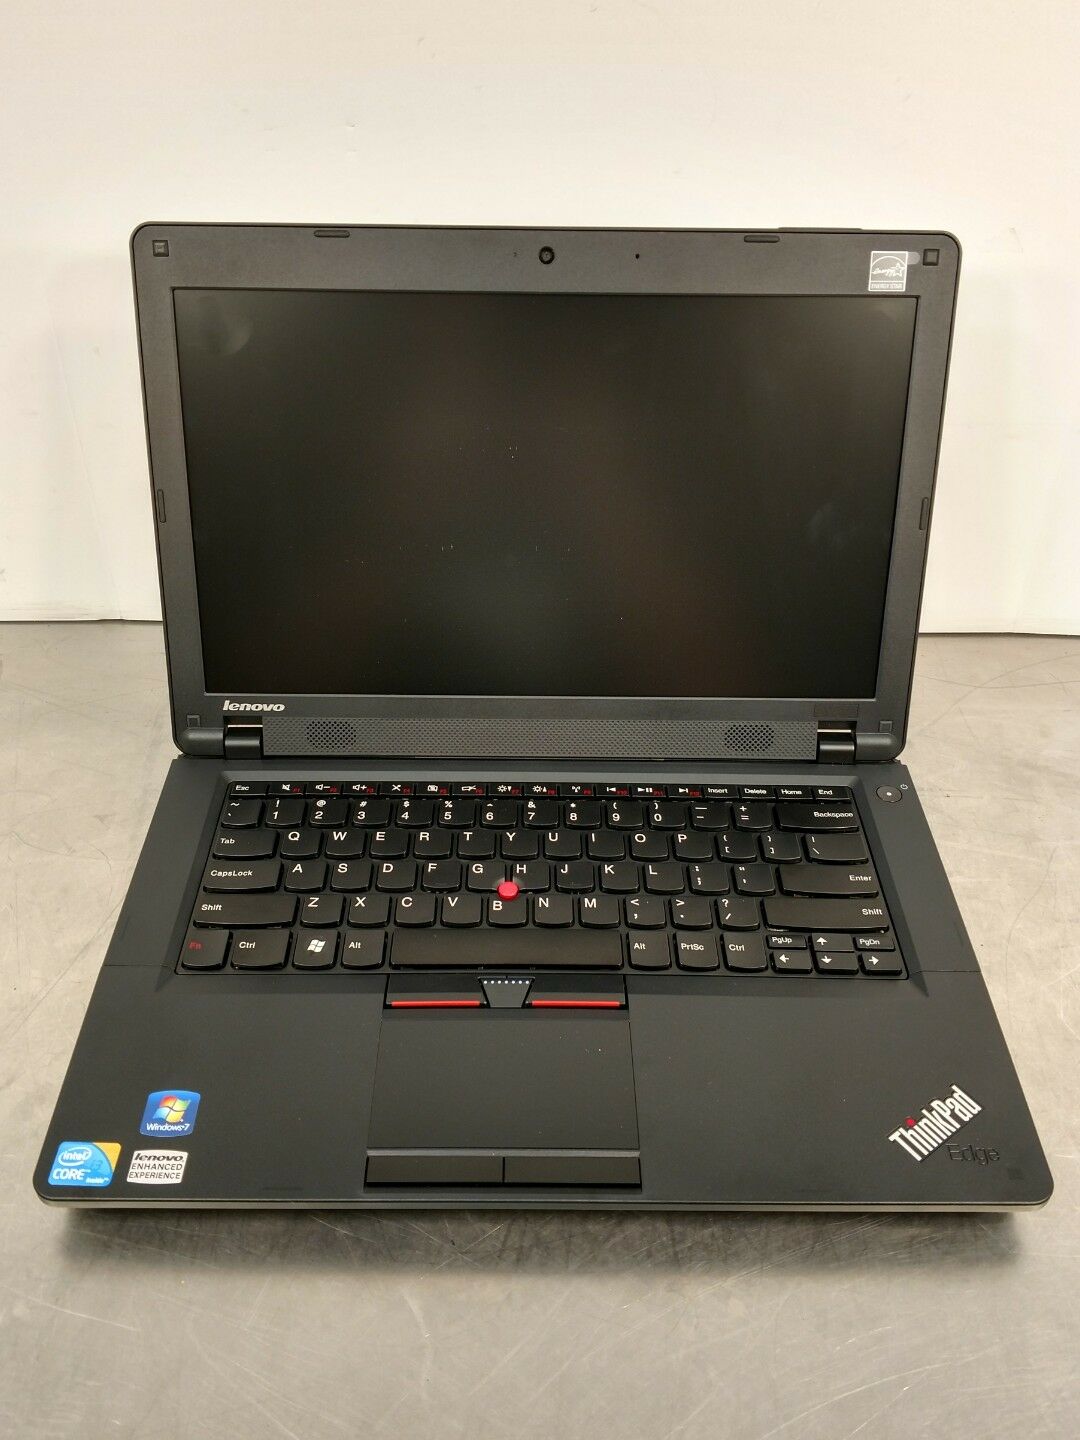 Lenovo ThinkPad Edge 0579-6AU Core i3 4GB RAM 320GB HD Laptop W3A